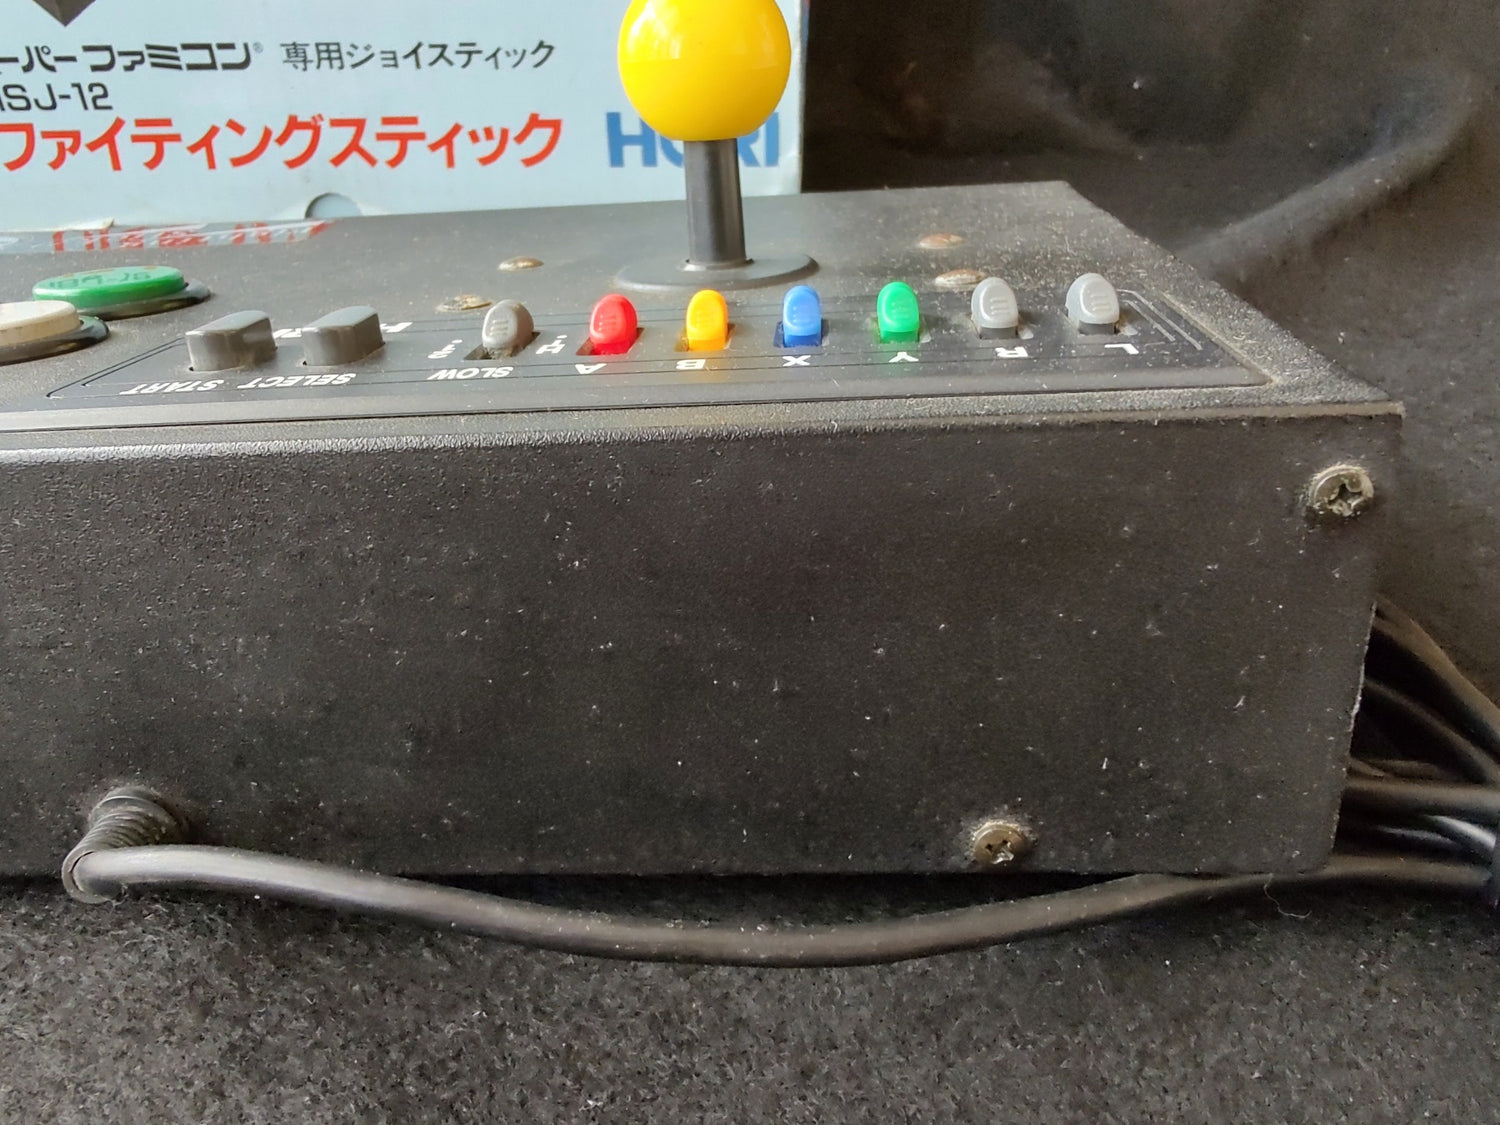 HORI Fighting Stick Controller HSJ-12 Super Famicom Nintendo Arcade Stick  Tested